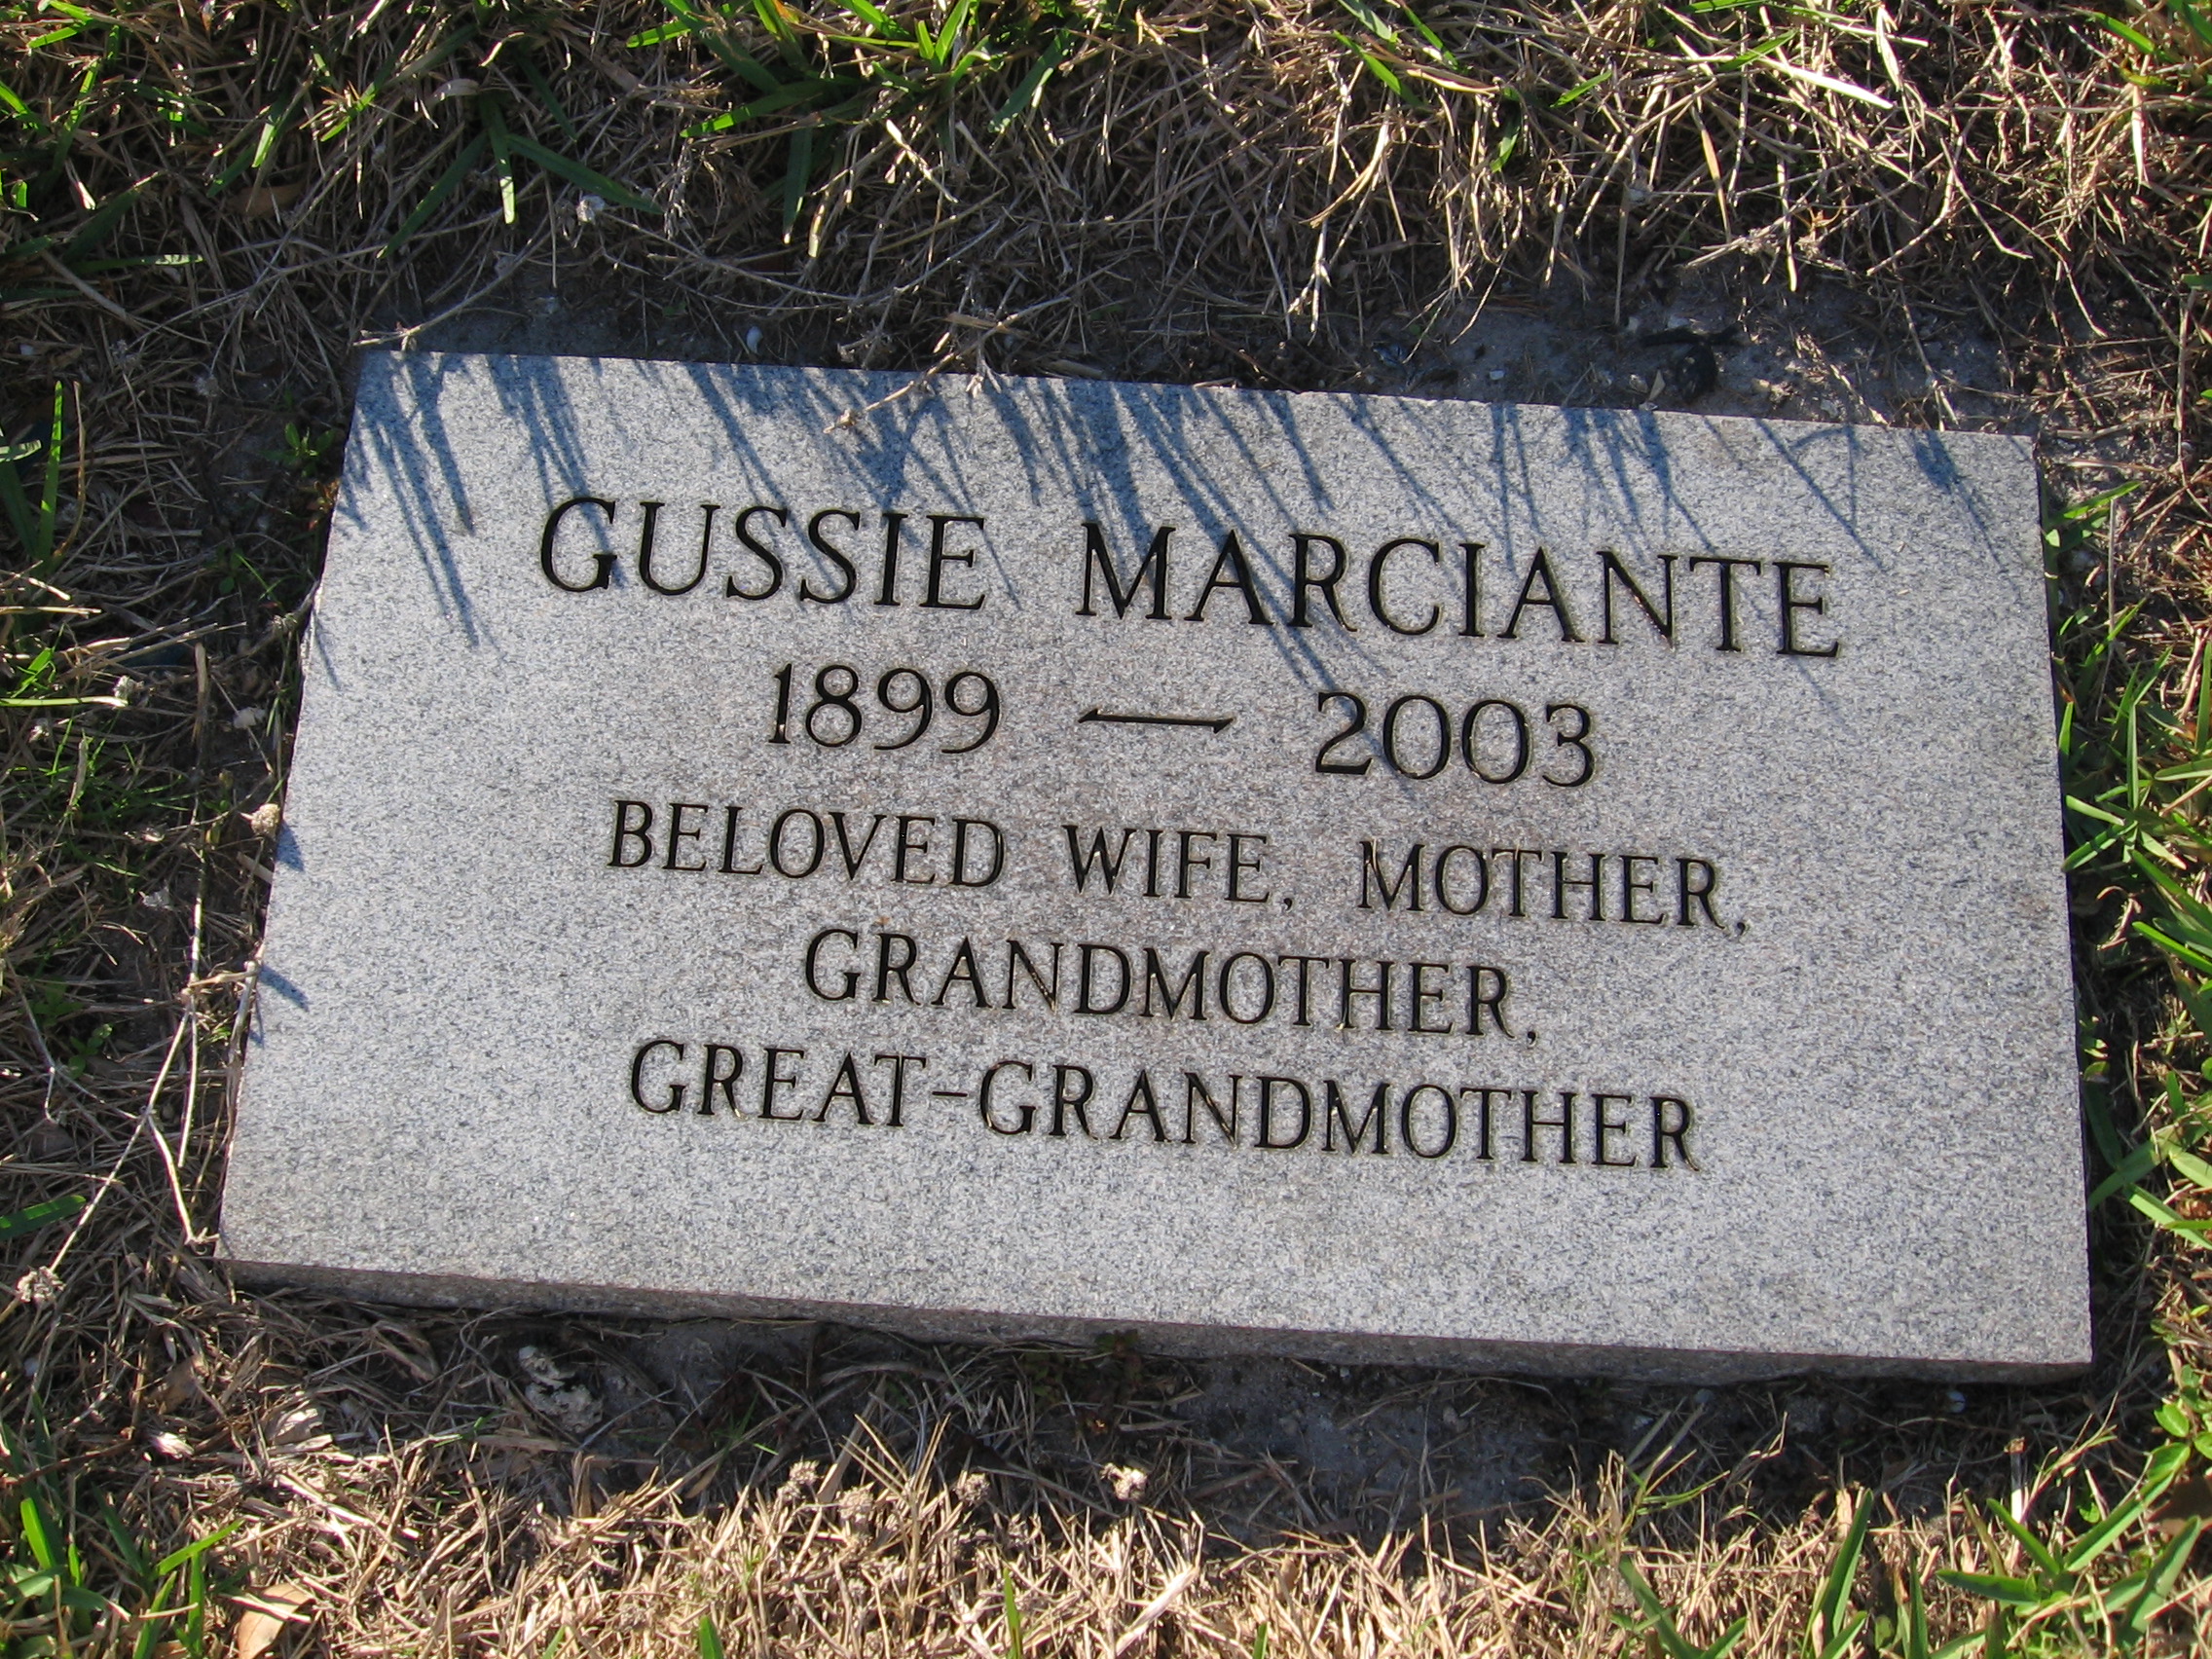 Gussie Marciante